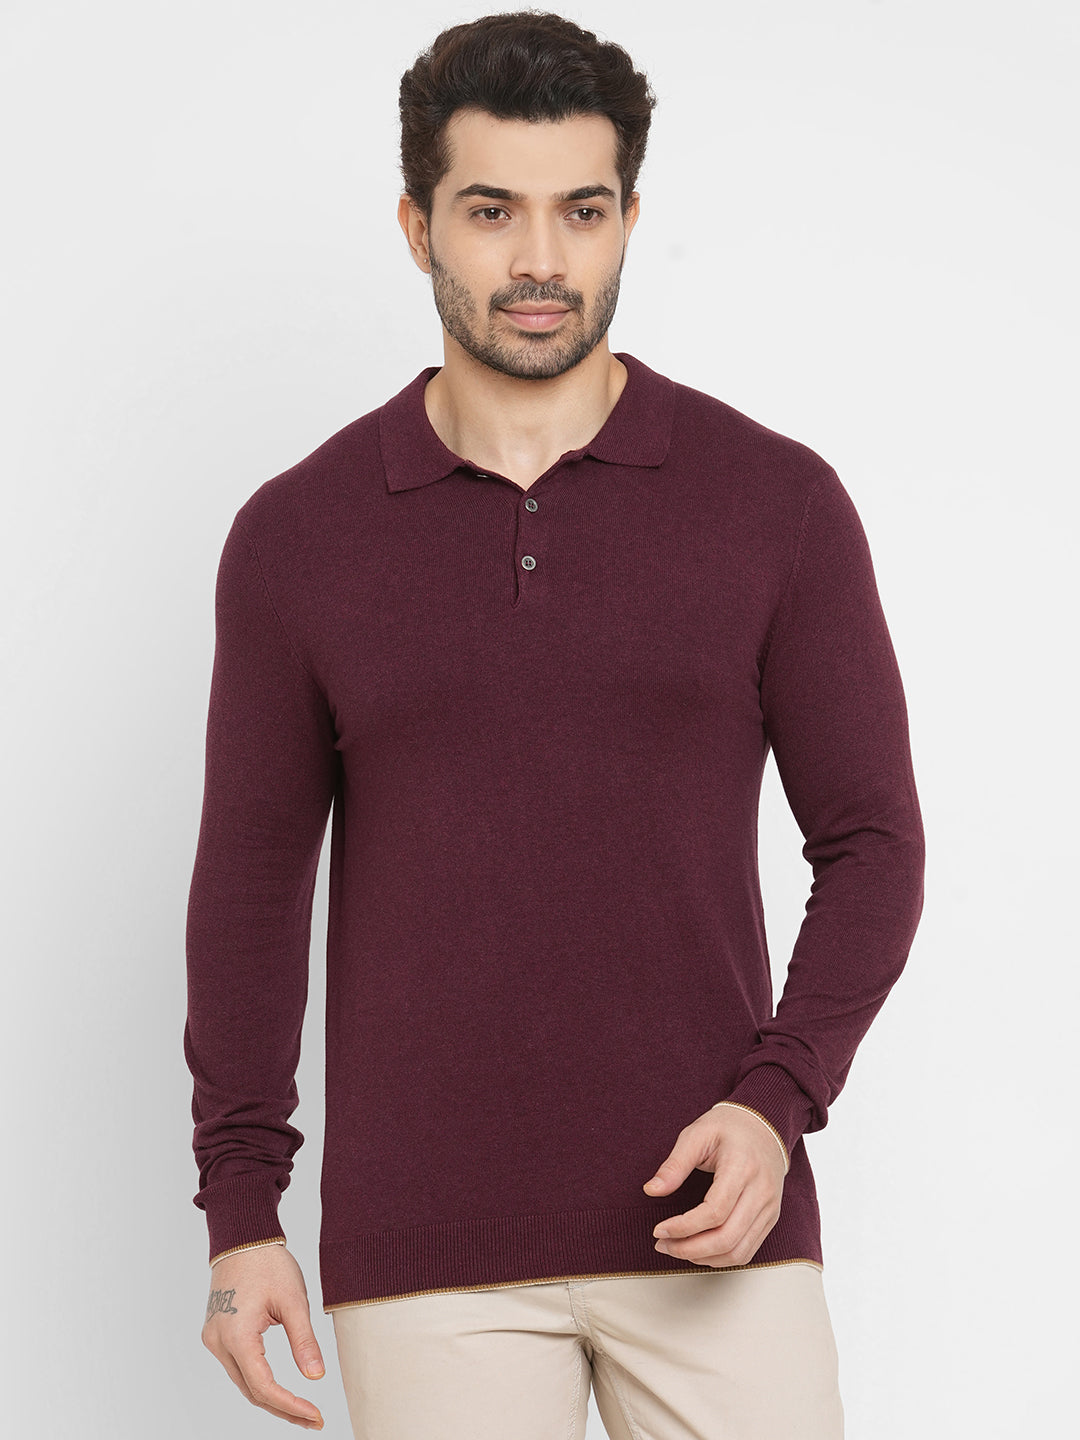 Men's Cotton Blend Wine Regular Fit Long Sleeved Tshirt